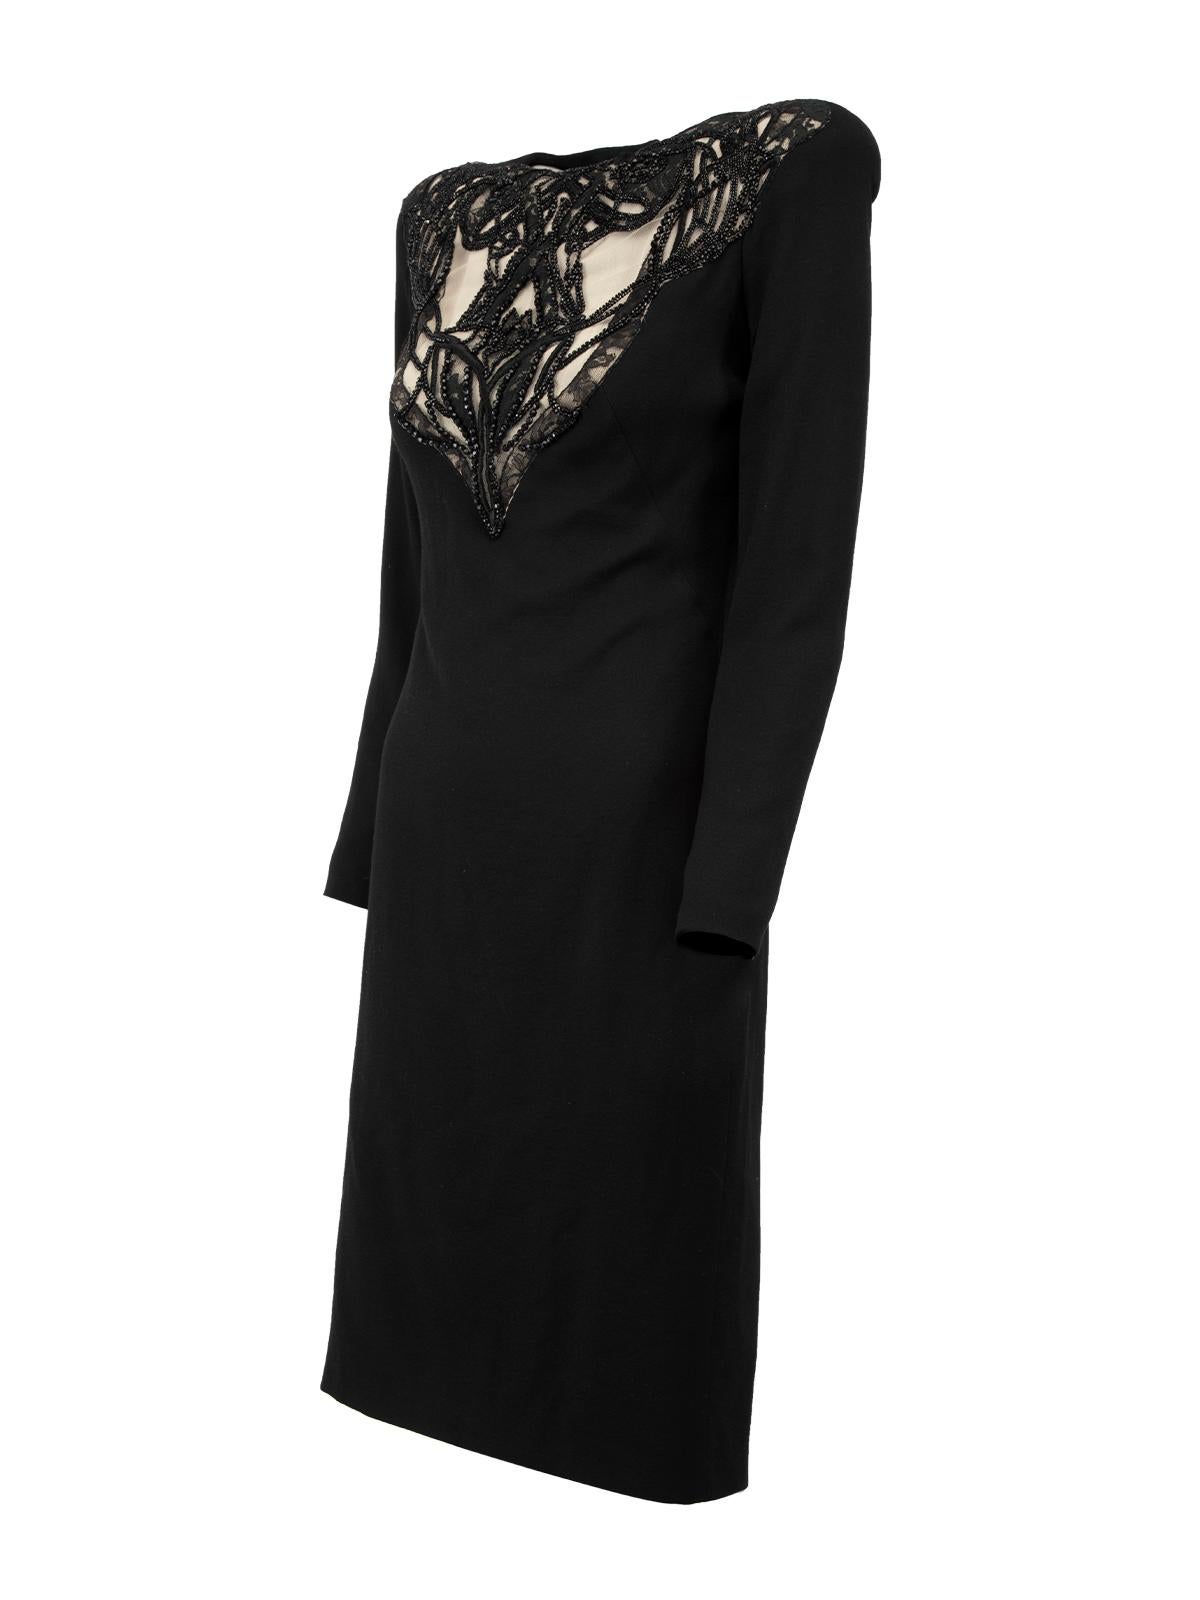 Pre-Loved Alexander McQueen Women's Black Beaded Long Sleeve Mini Dress 1